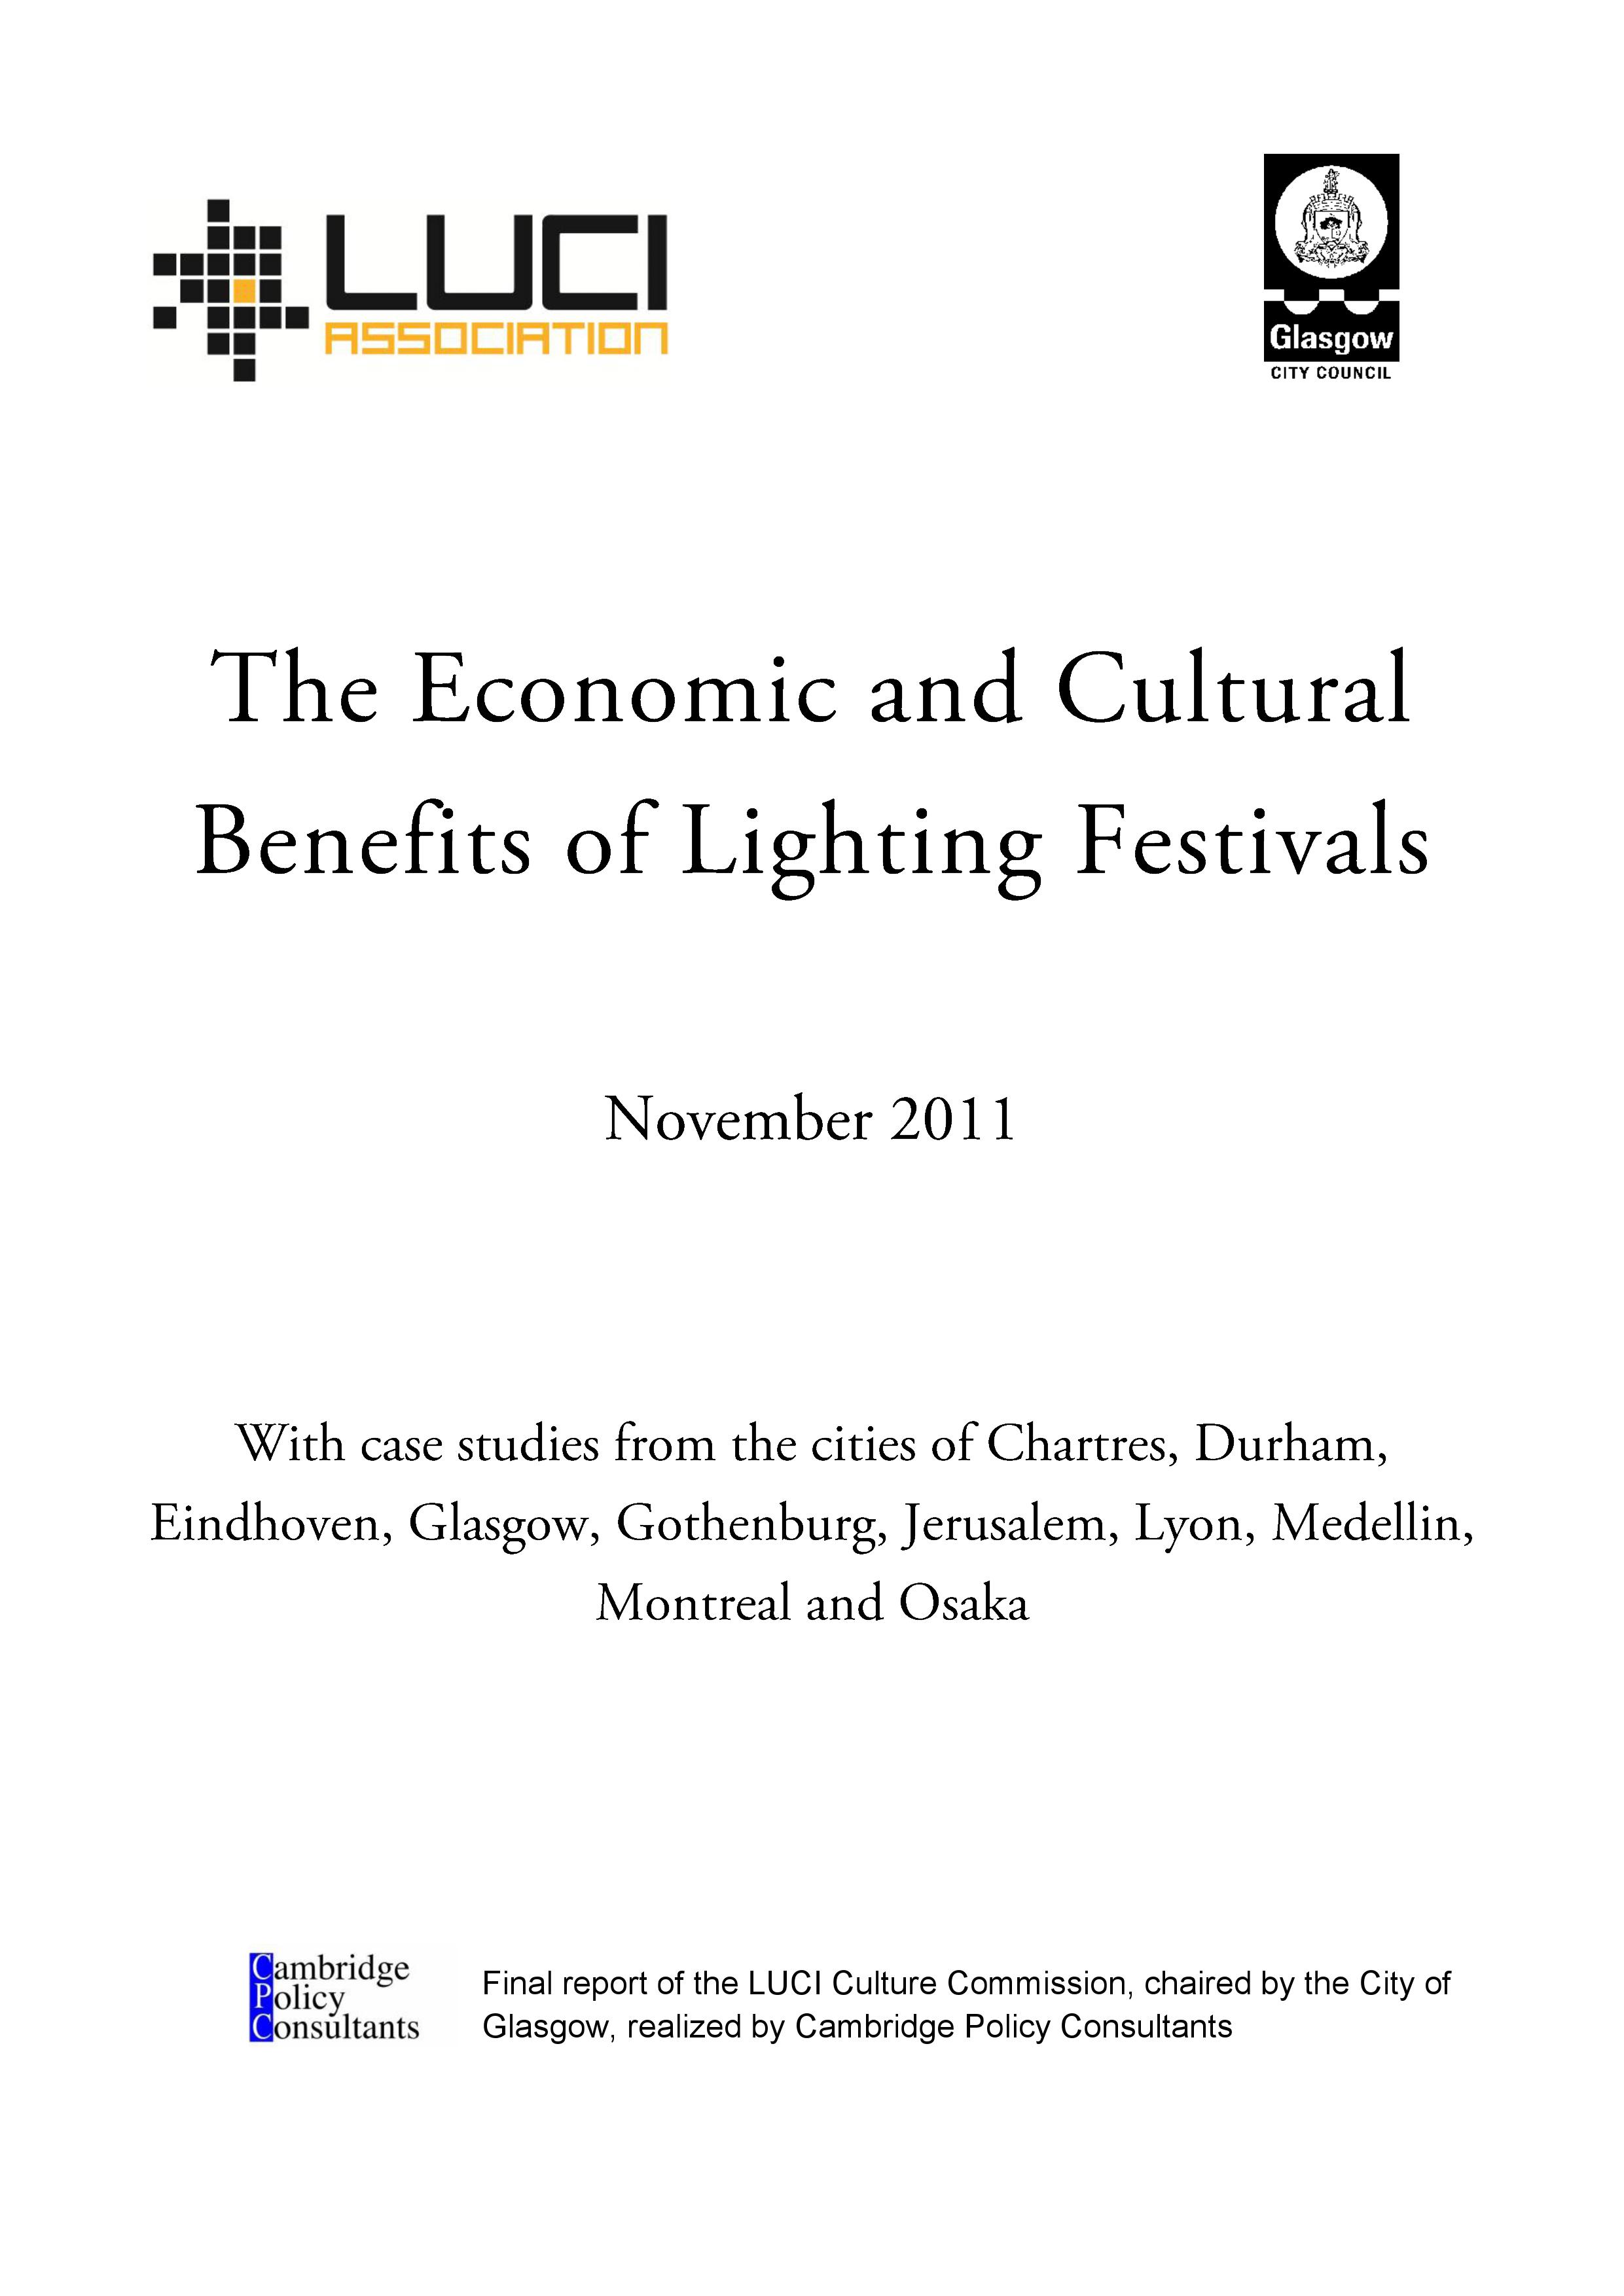 LUCI Benefits of Light Festivals